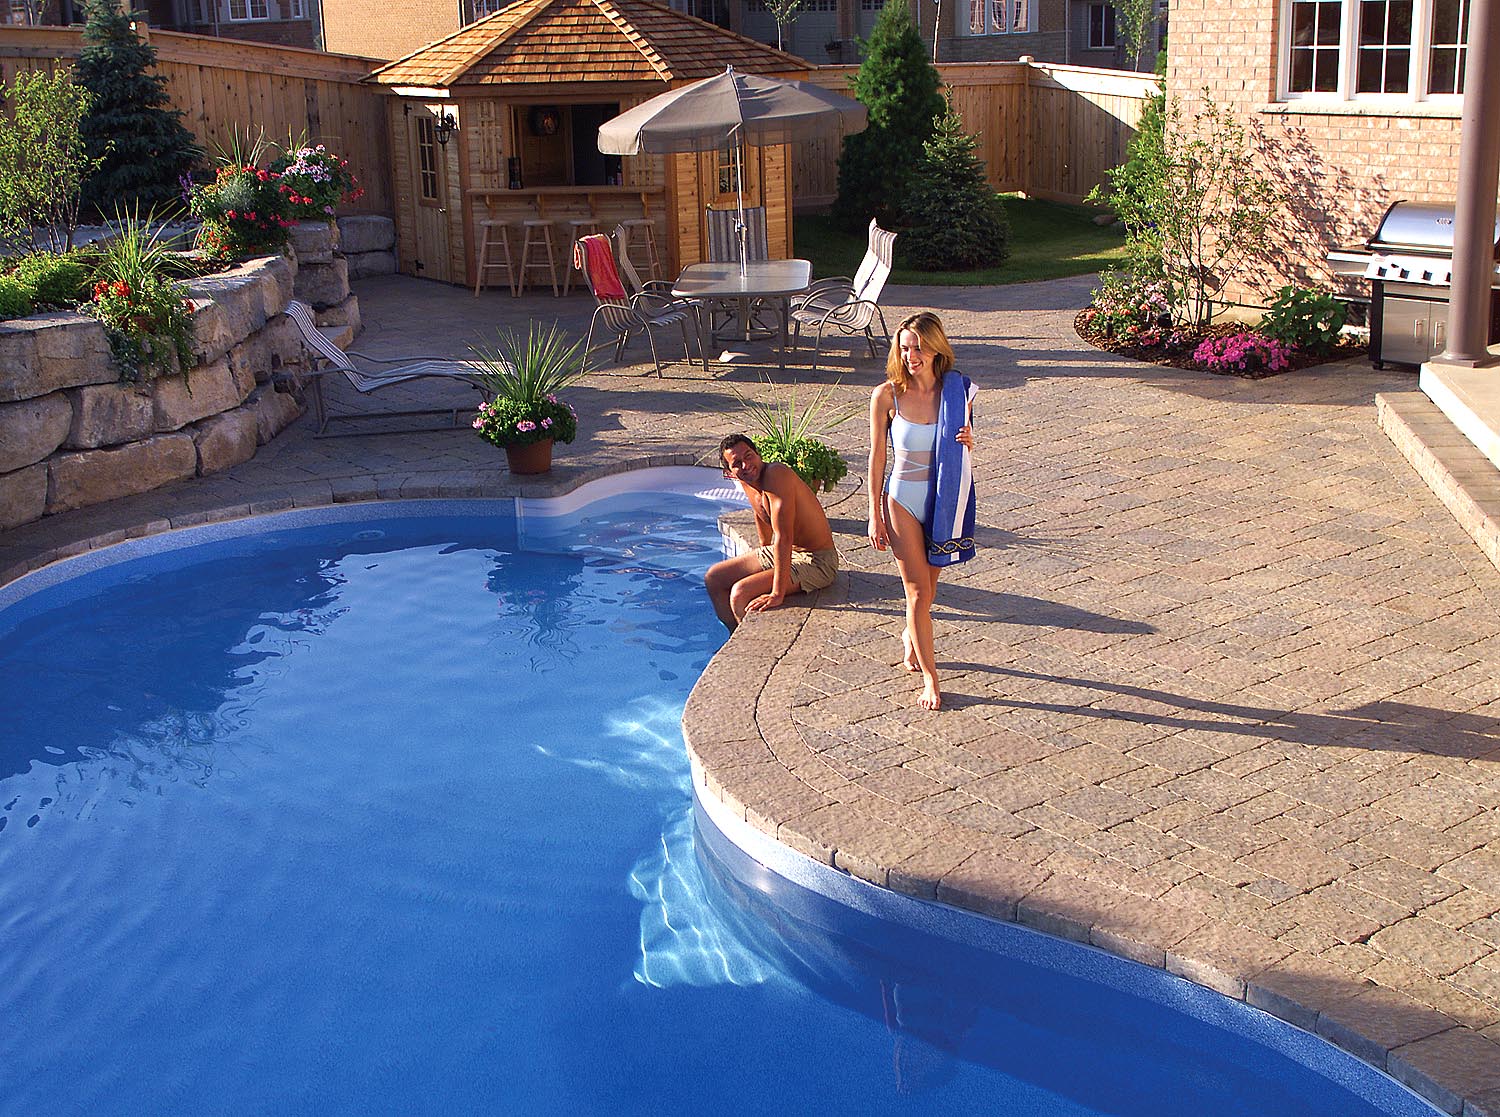 patio pool backyard paradise plantings landscape design hardscape pavers retaining wall